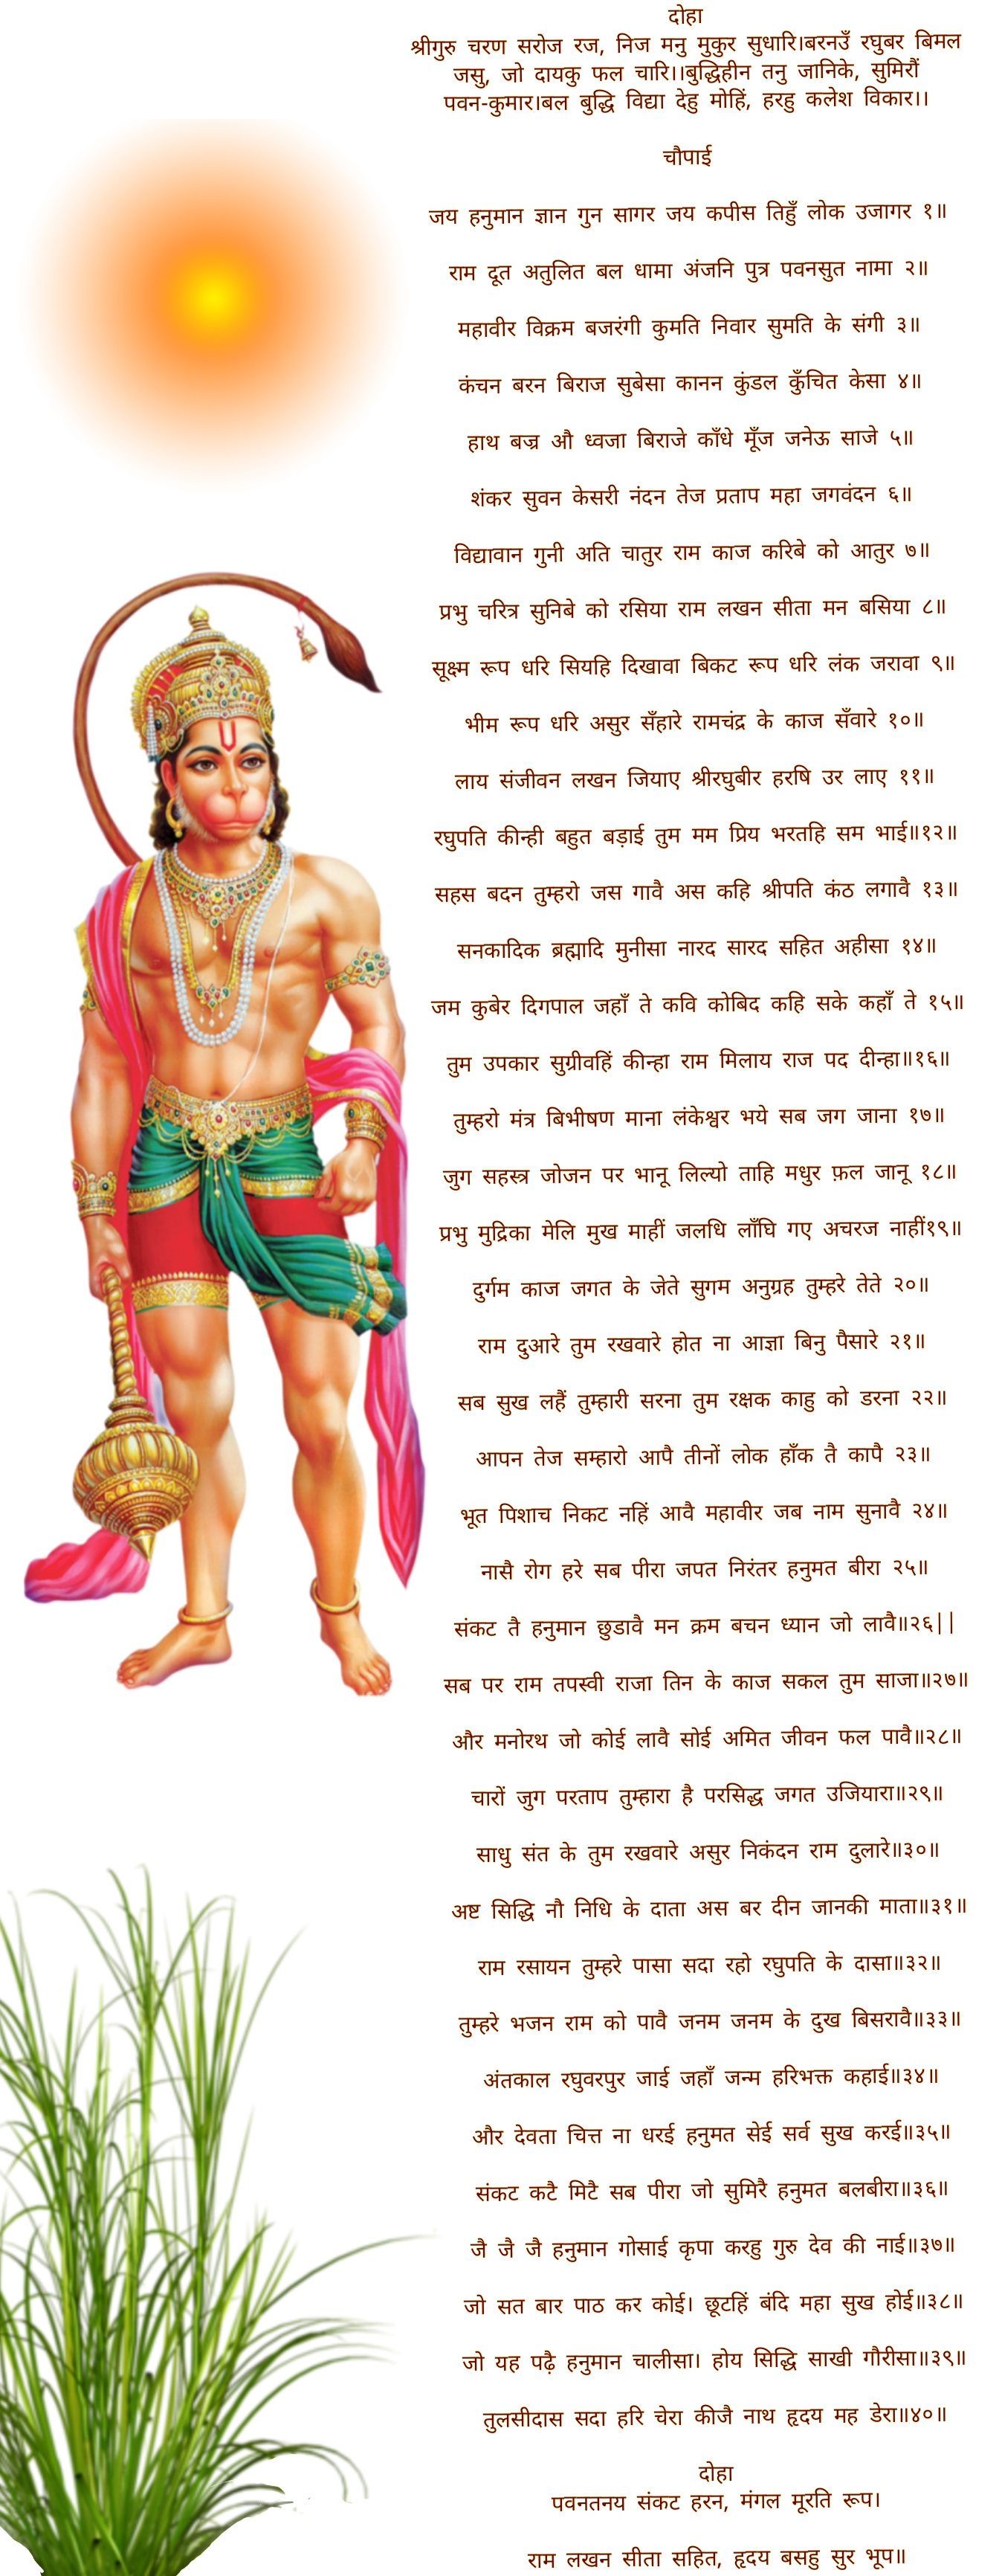 हनुमान चालीसा वालपेपर | Hanuman chalisa wallpaper